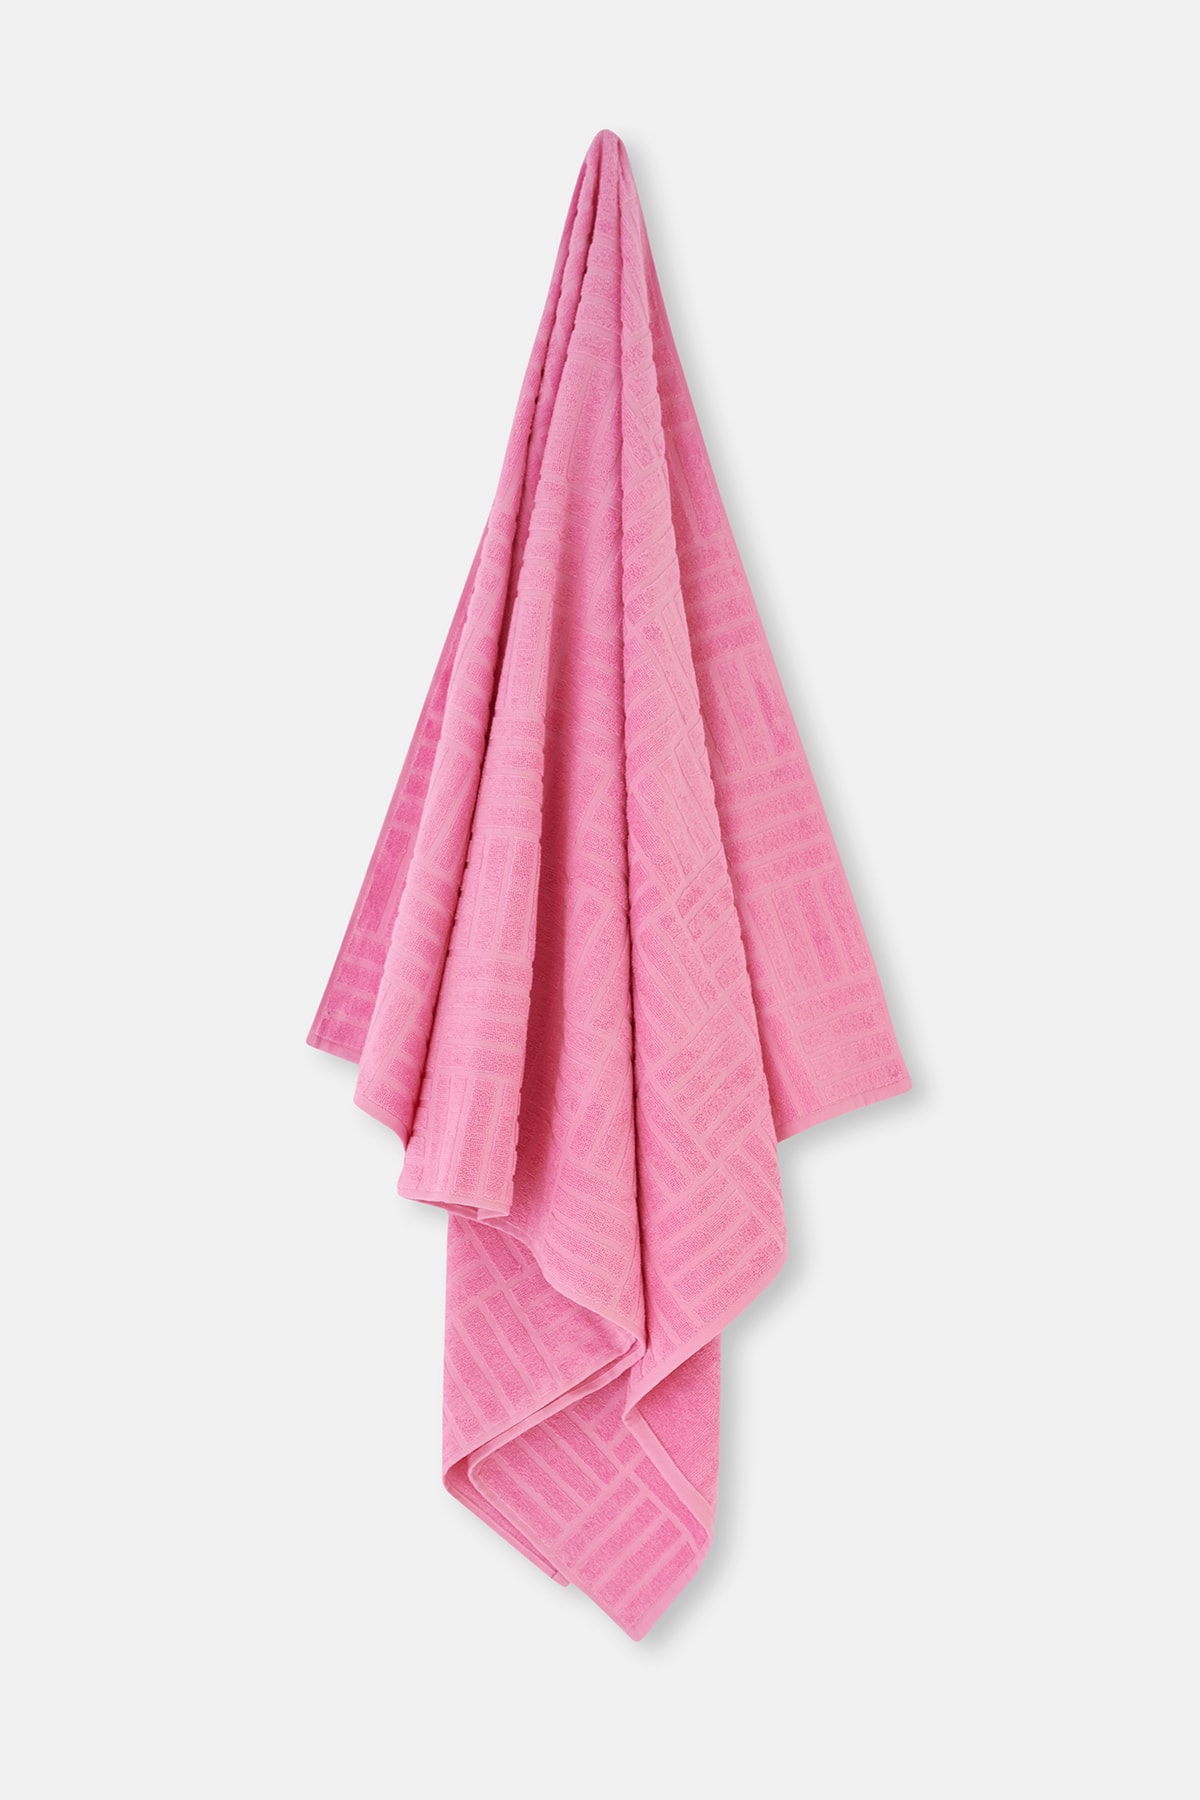 Dagi Pink Line Textured Solid Color Towel 85X150